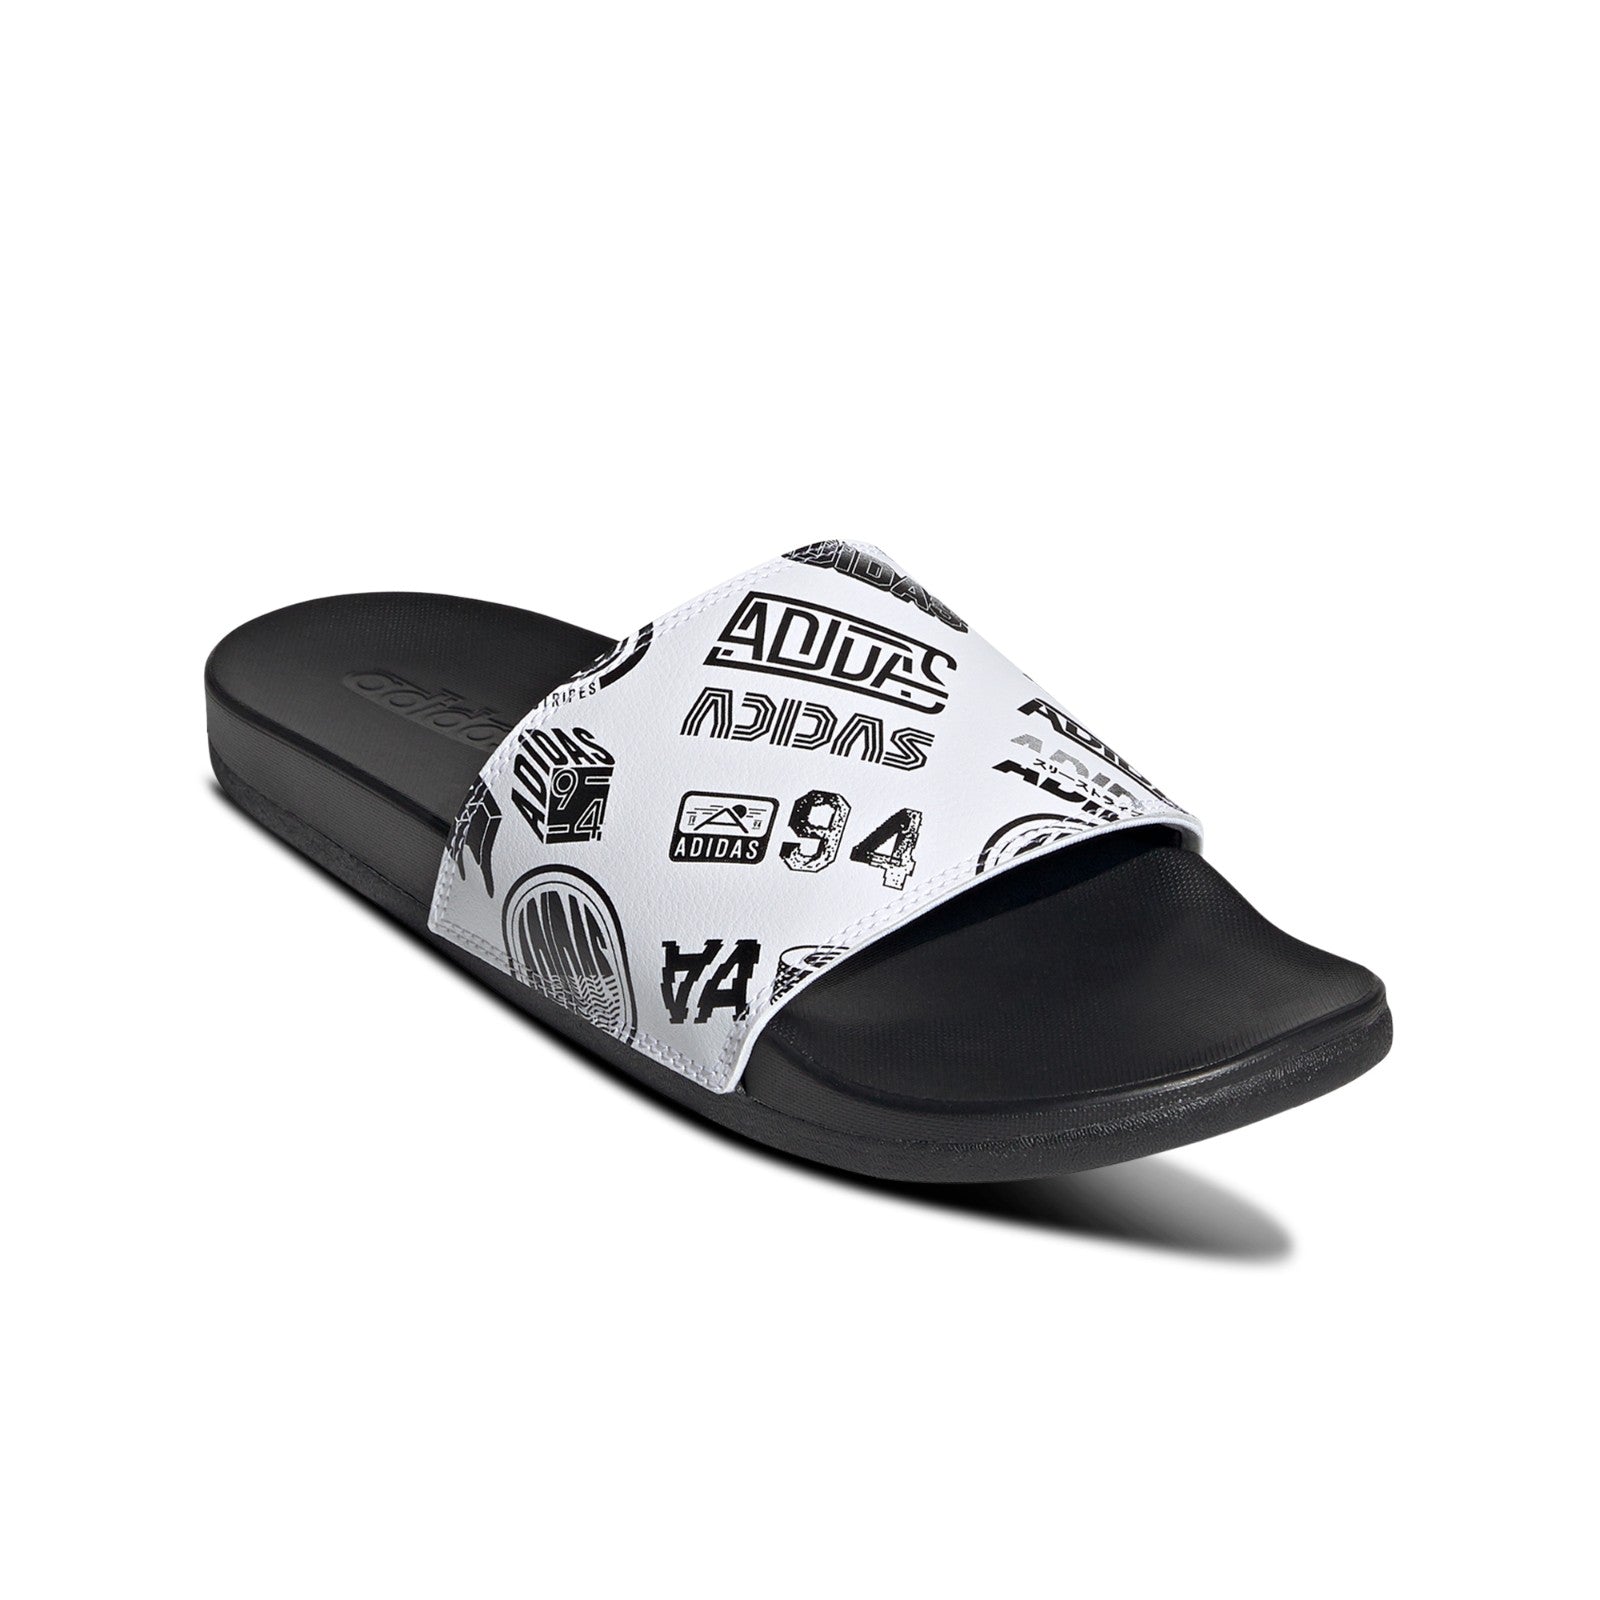 Adidas Originals Men's ADILETTE Slides Black/White 280647 f | eBay